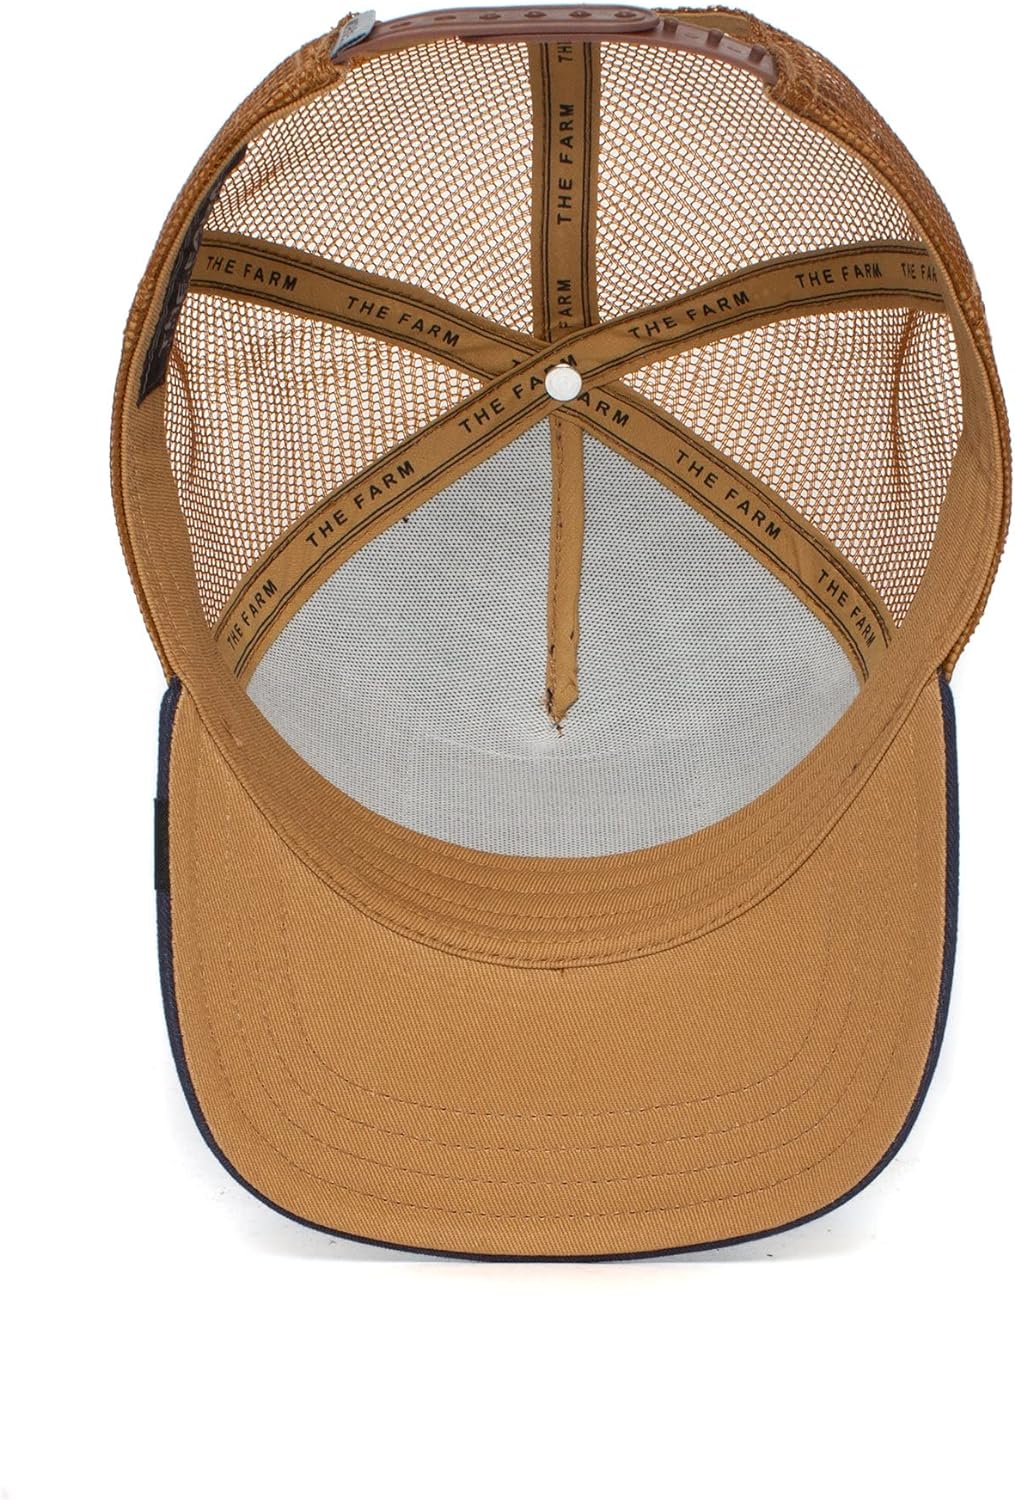 Goorin Bros. The Farm Unisex Original Adjustable Snapback Trucker Hat